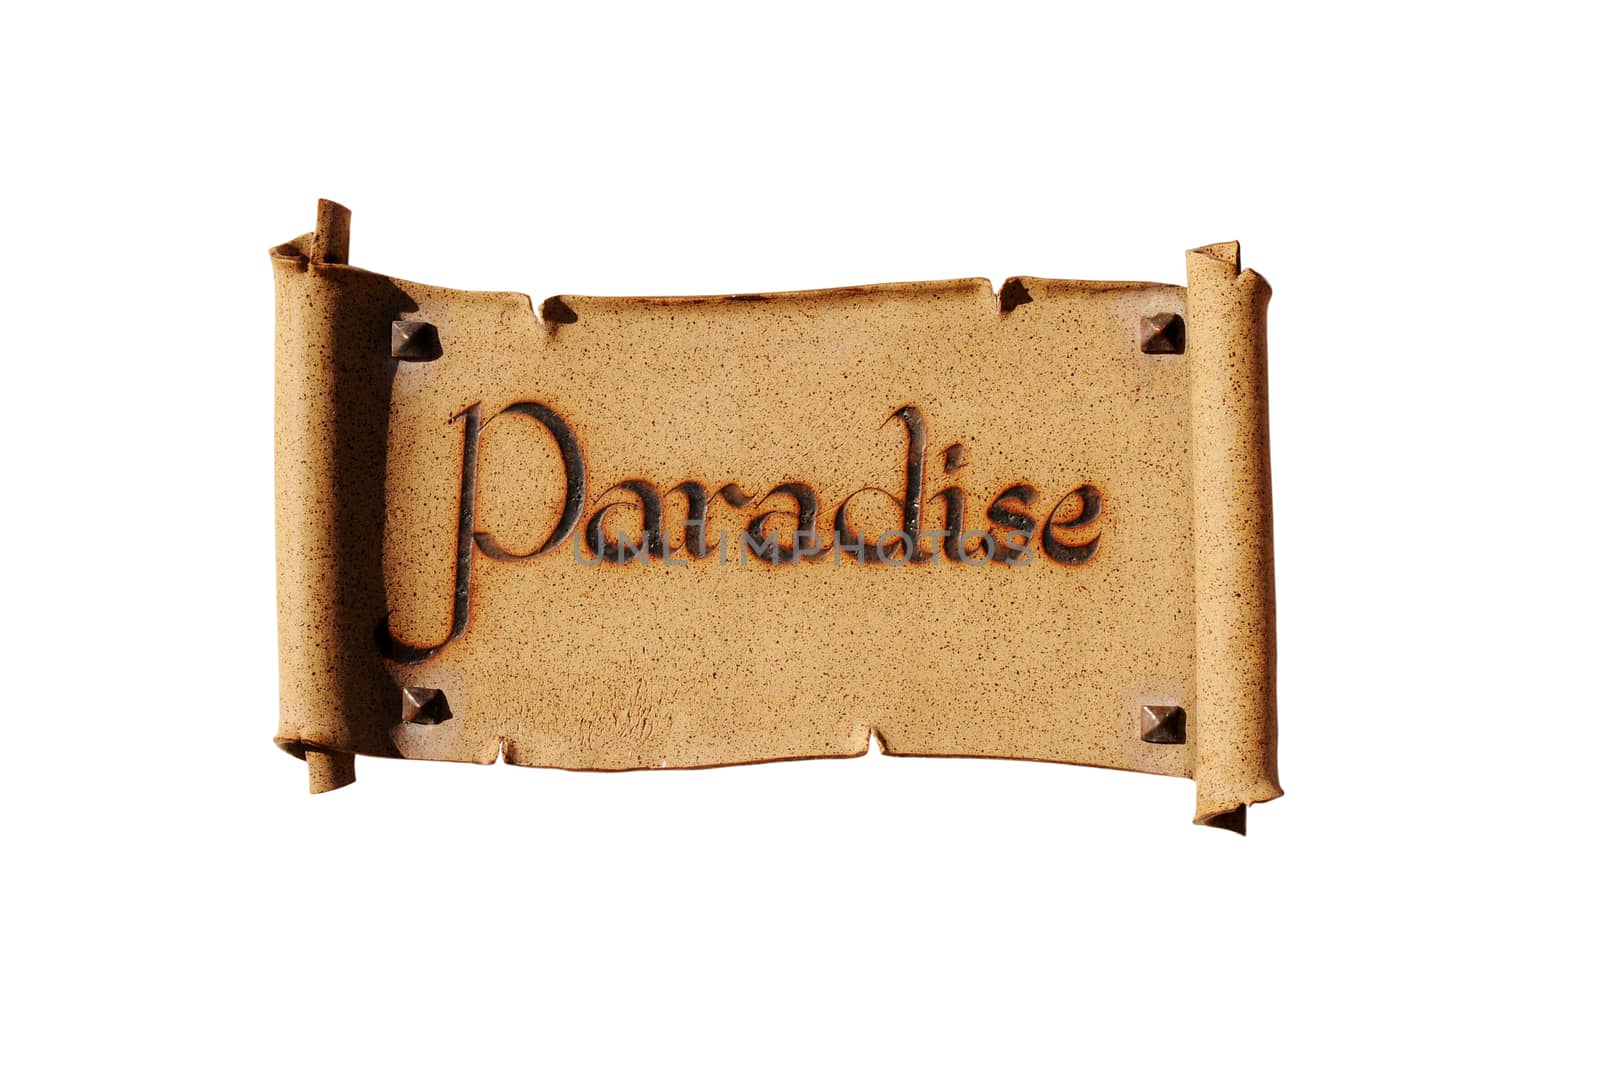 Ceramic sign reading Paradise - cutout